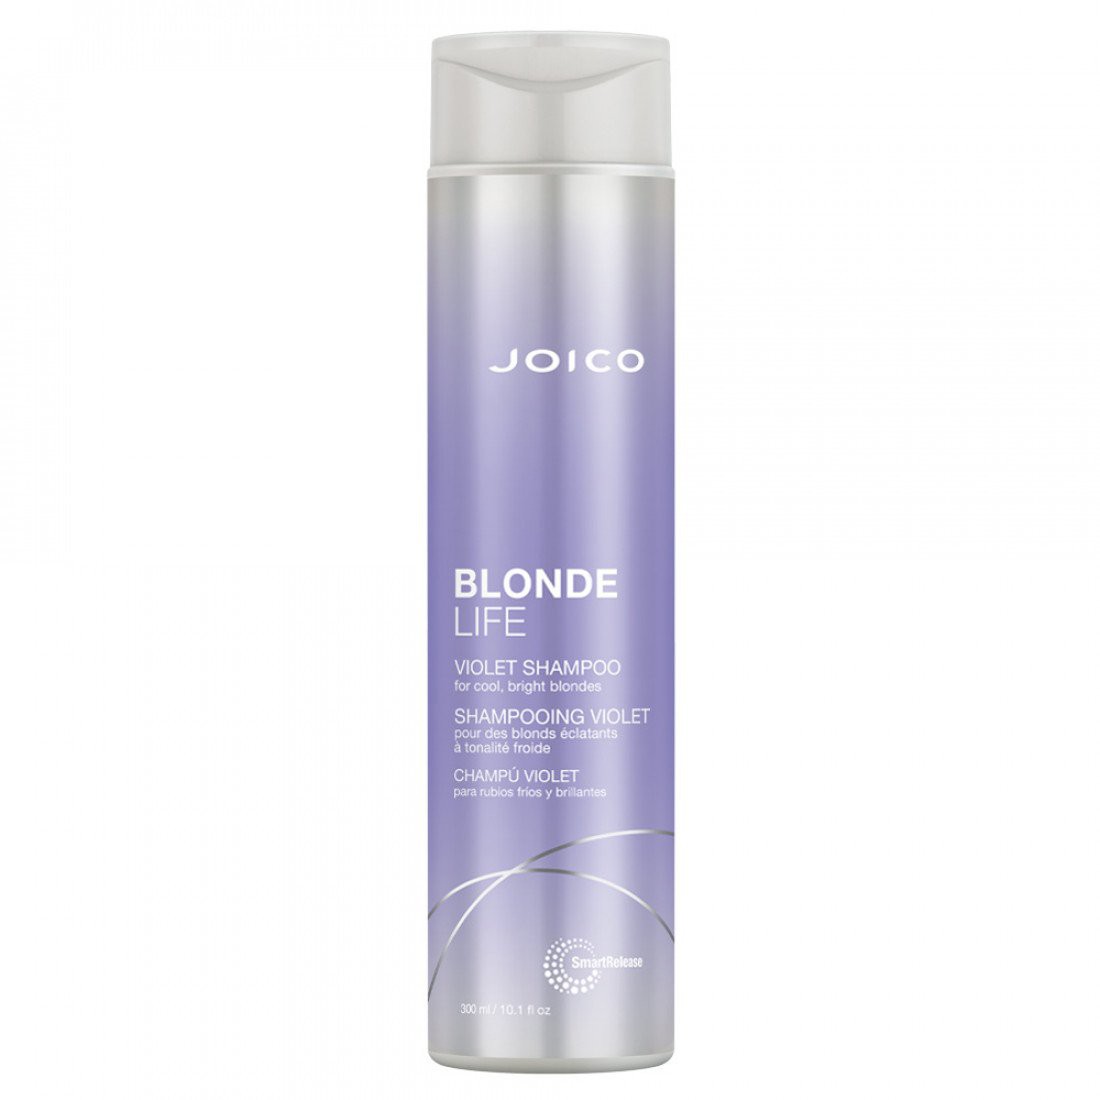 Joico Blonde Life Violet shampo 300ml